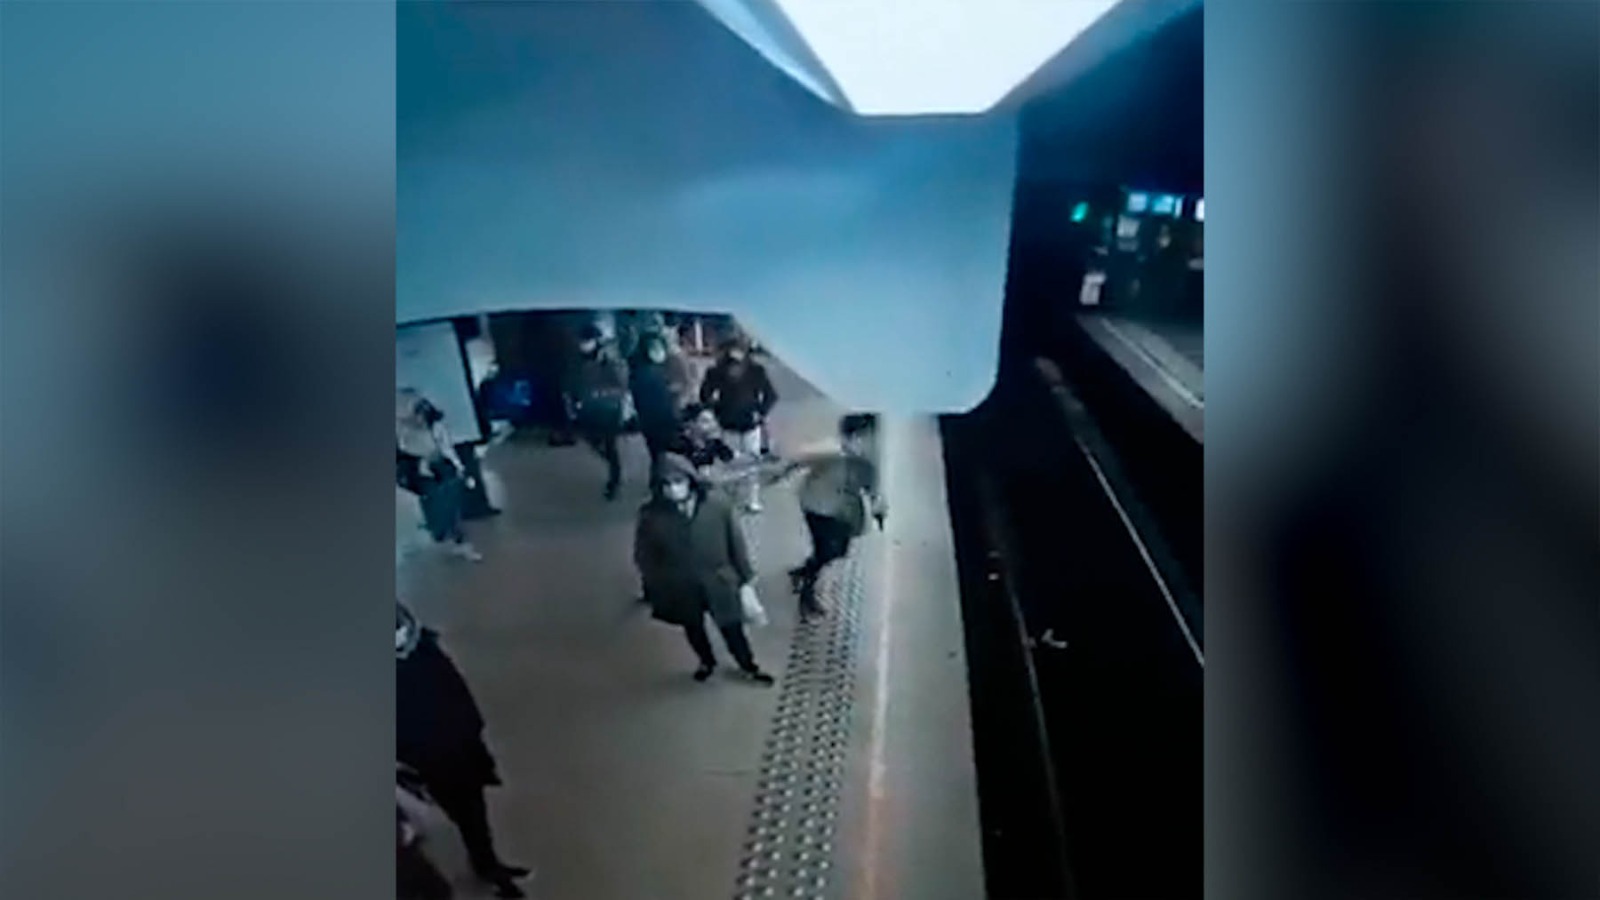 Мужчина столкнул девушку в метро. Толкнул под поезд в метро. Мужчина толкнул женщину в метро. В метро толкнули человека под поезд. Мужчина столкнул девочку в метро.